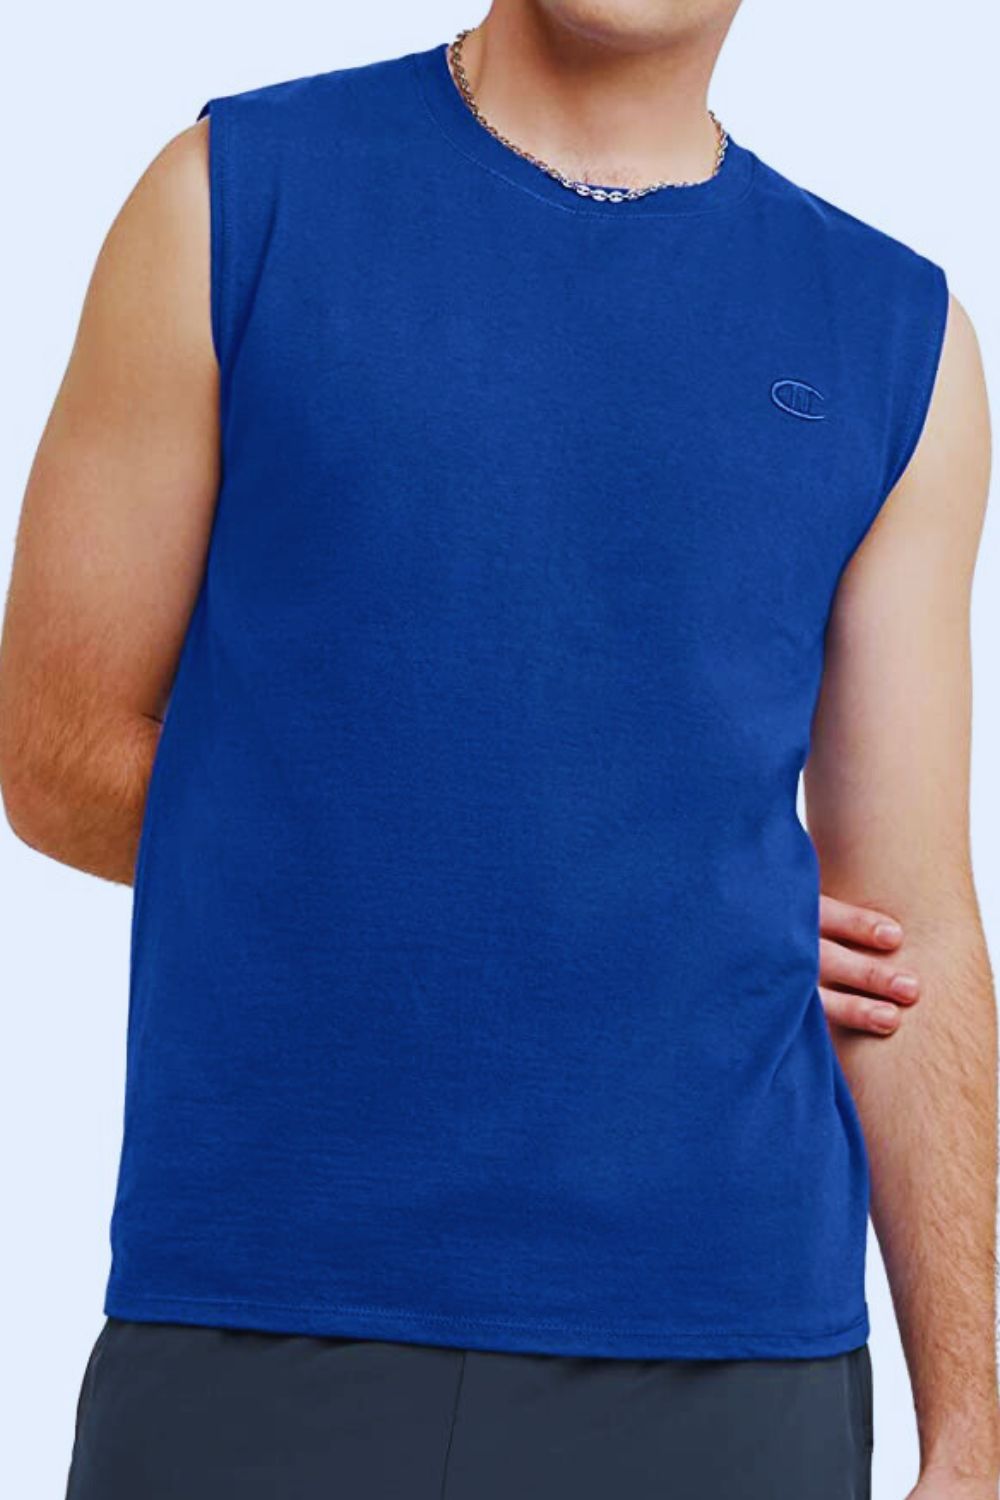 Cotton Sleeveless T Shirts for Men